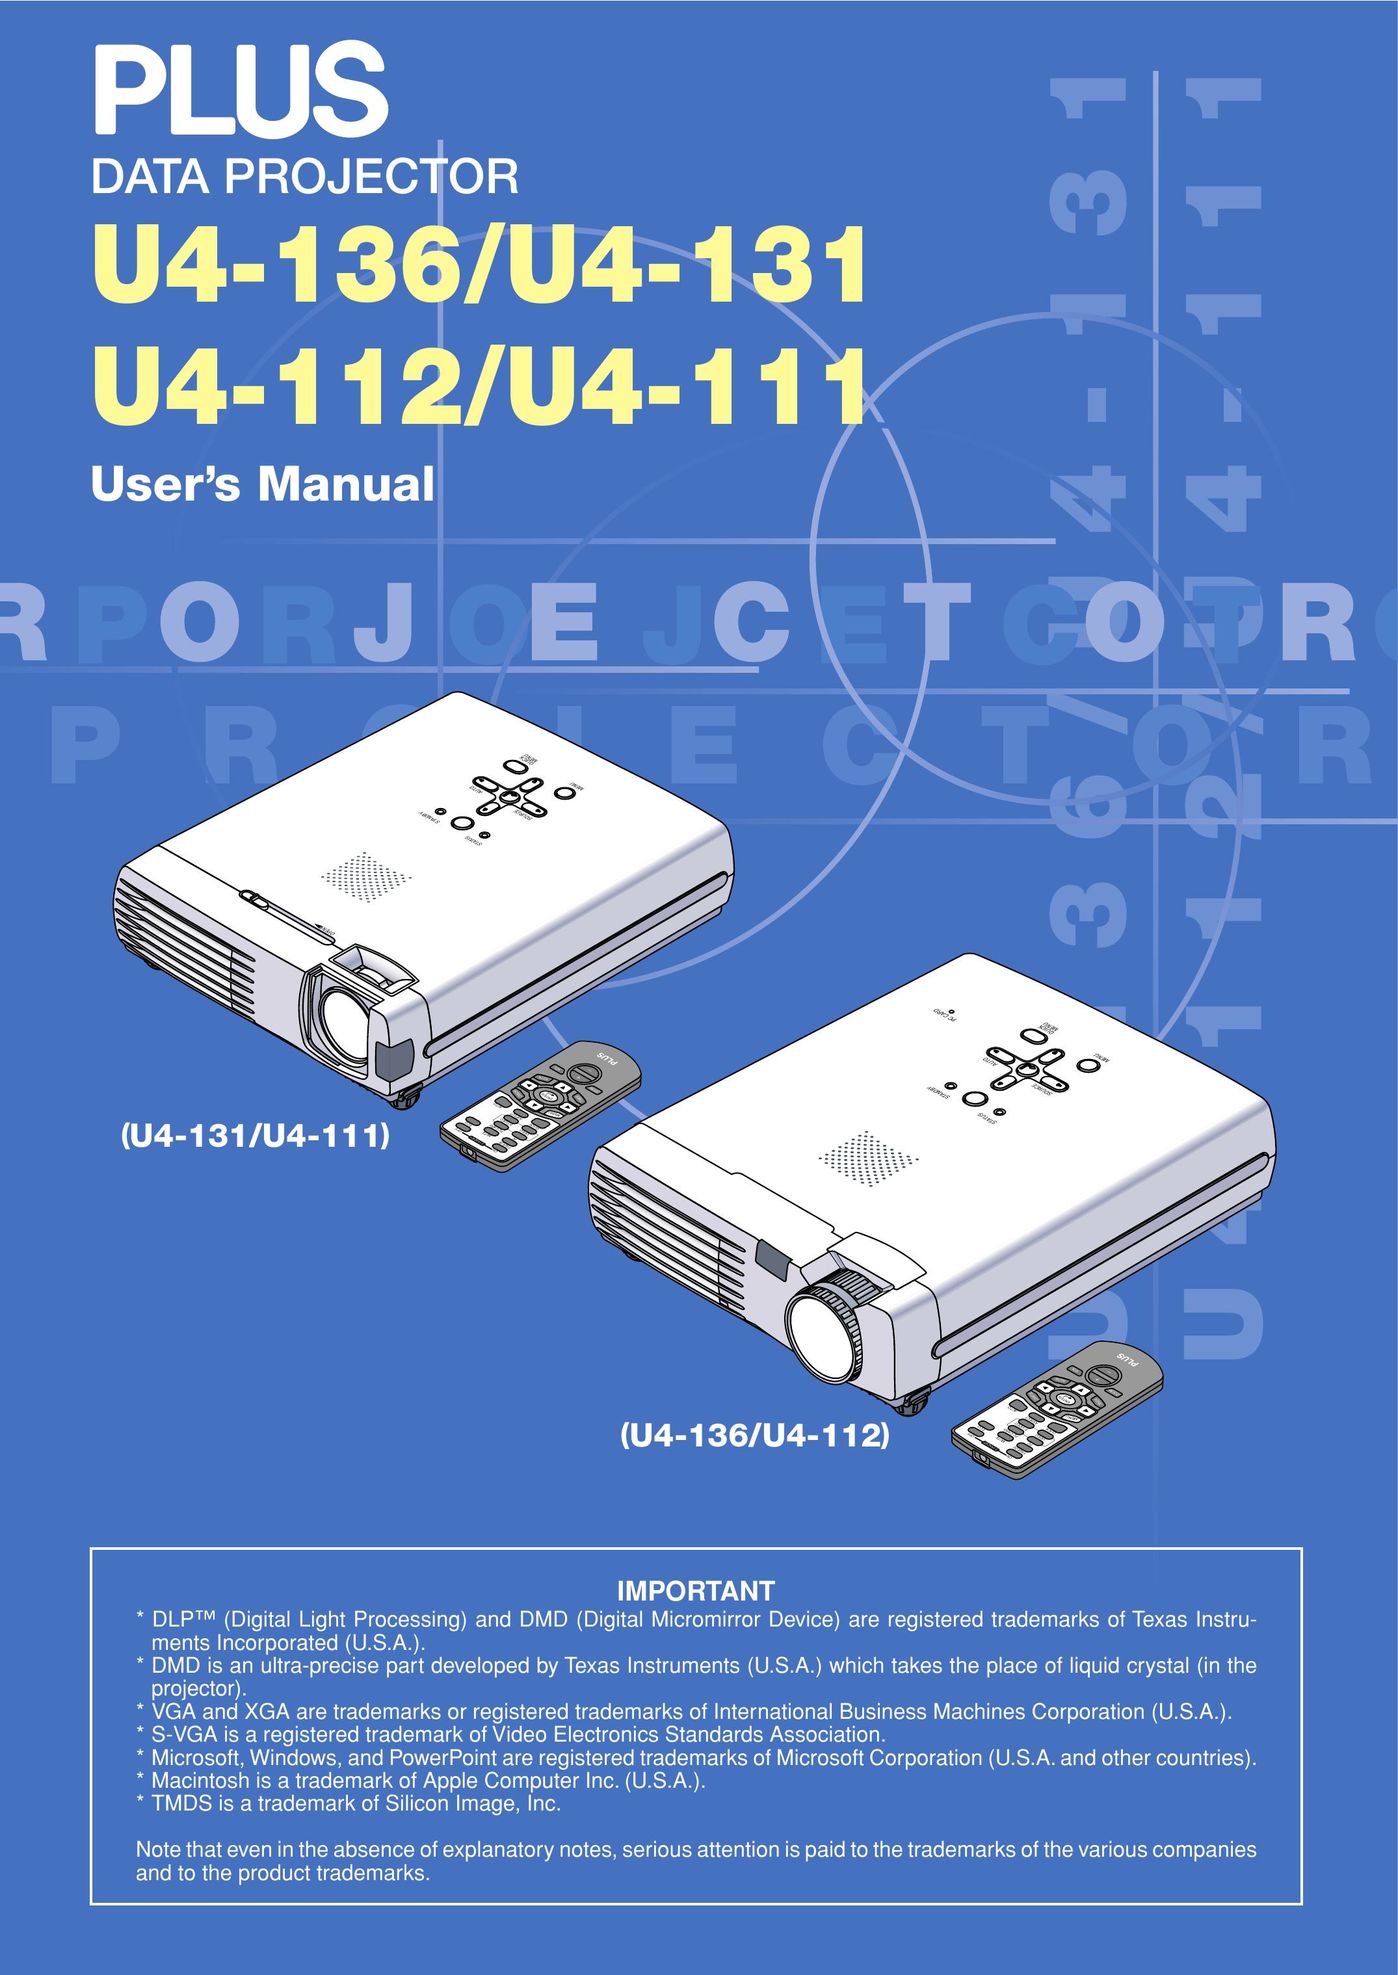 PLUS Vision U4-136/U4-131 Projector User Manual